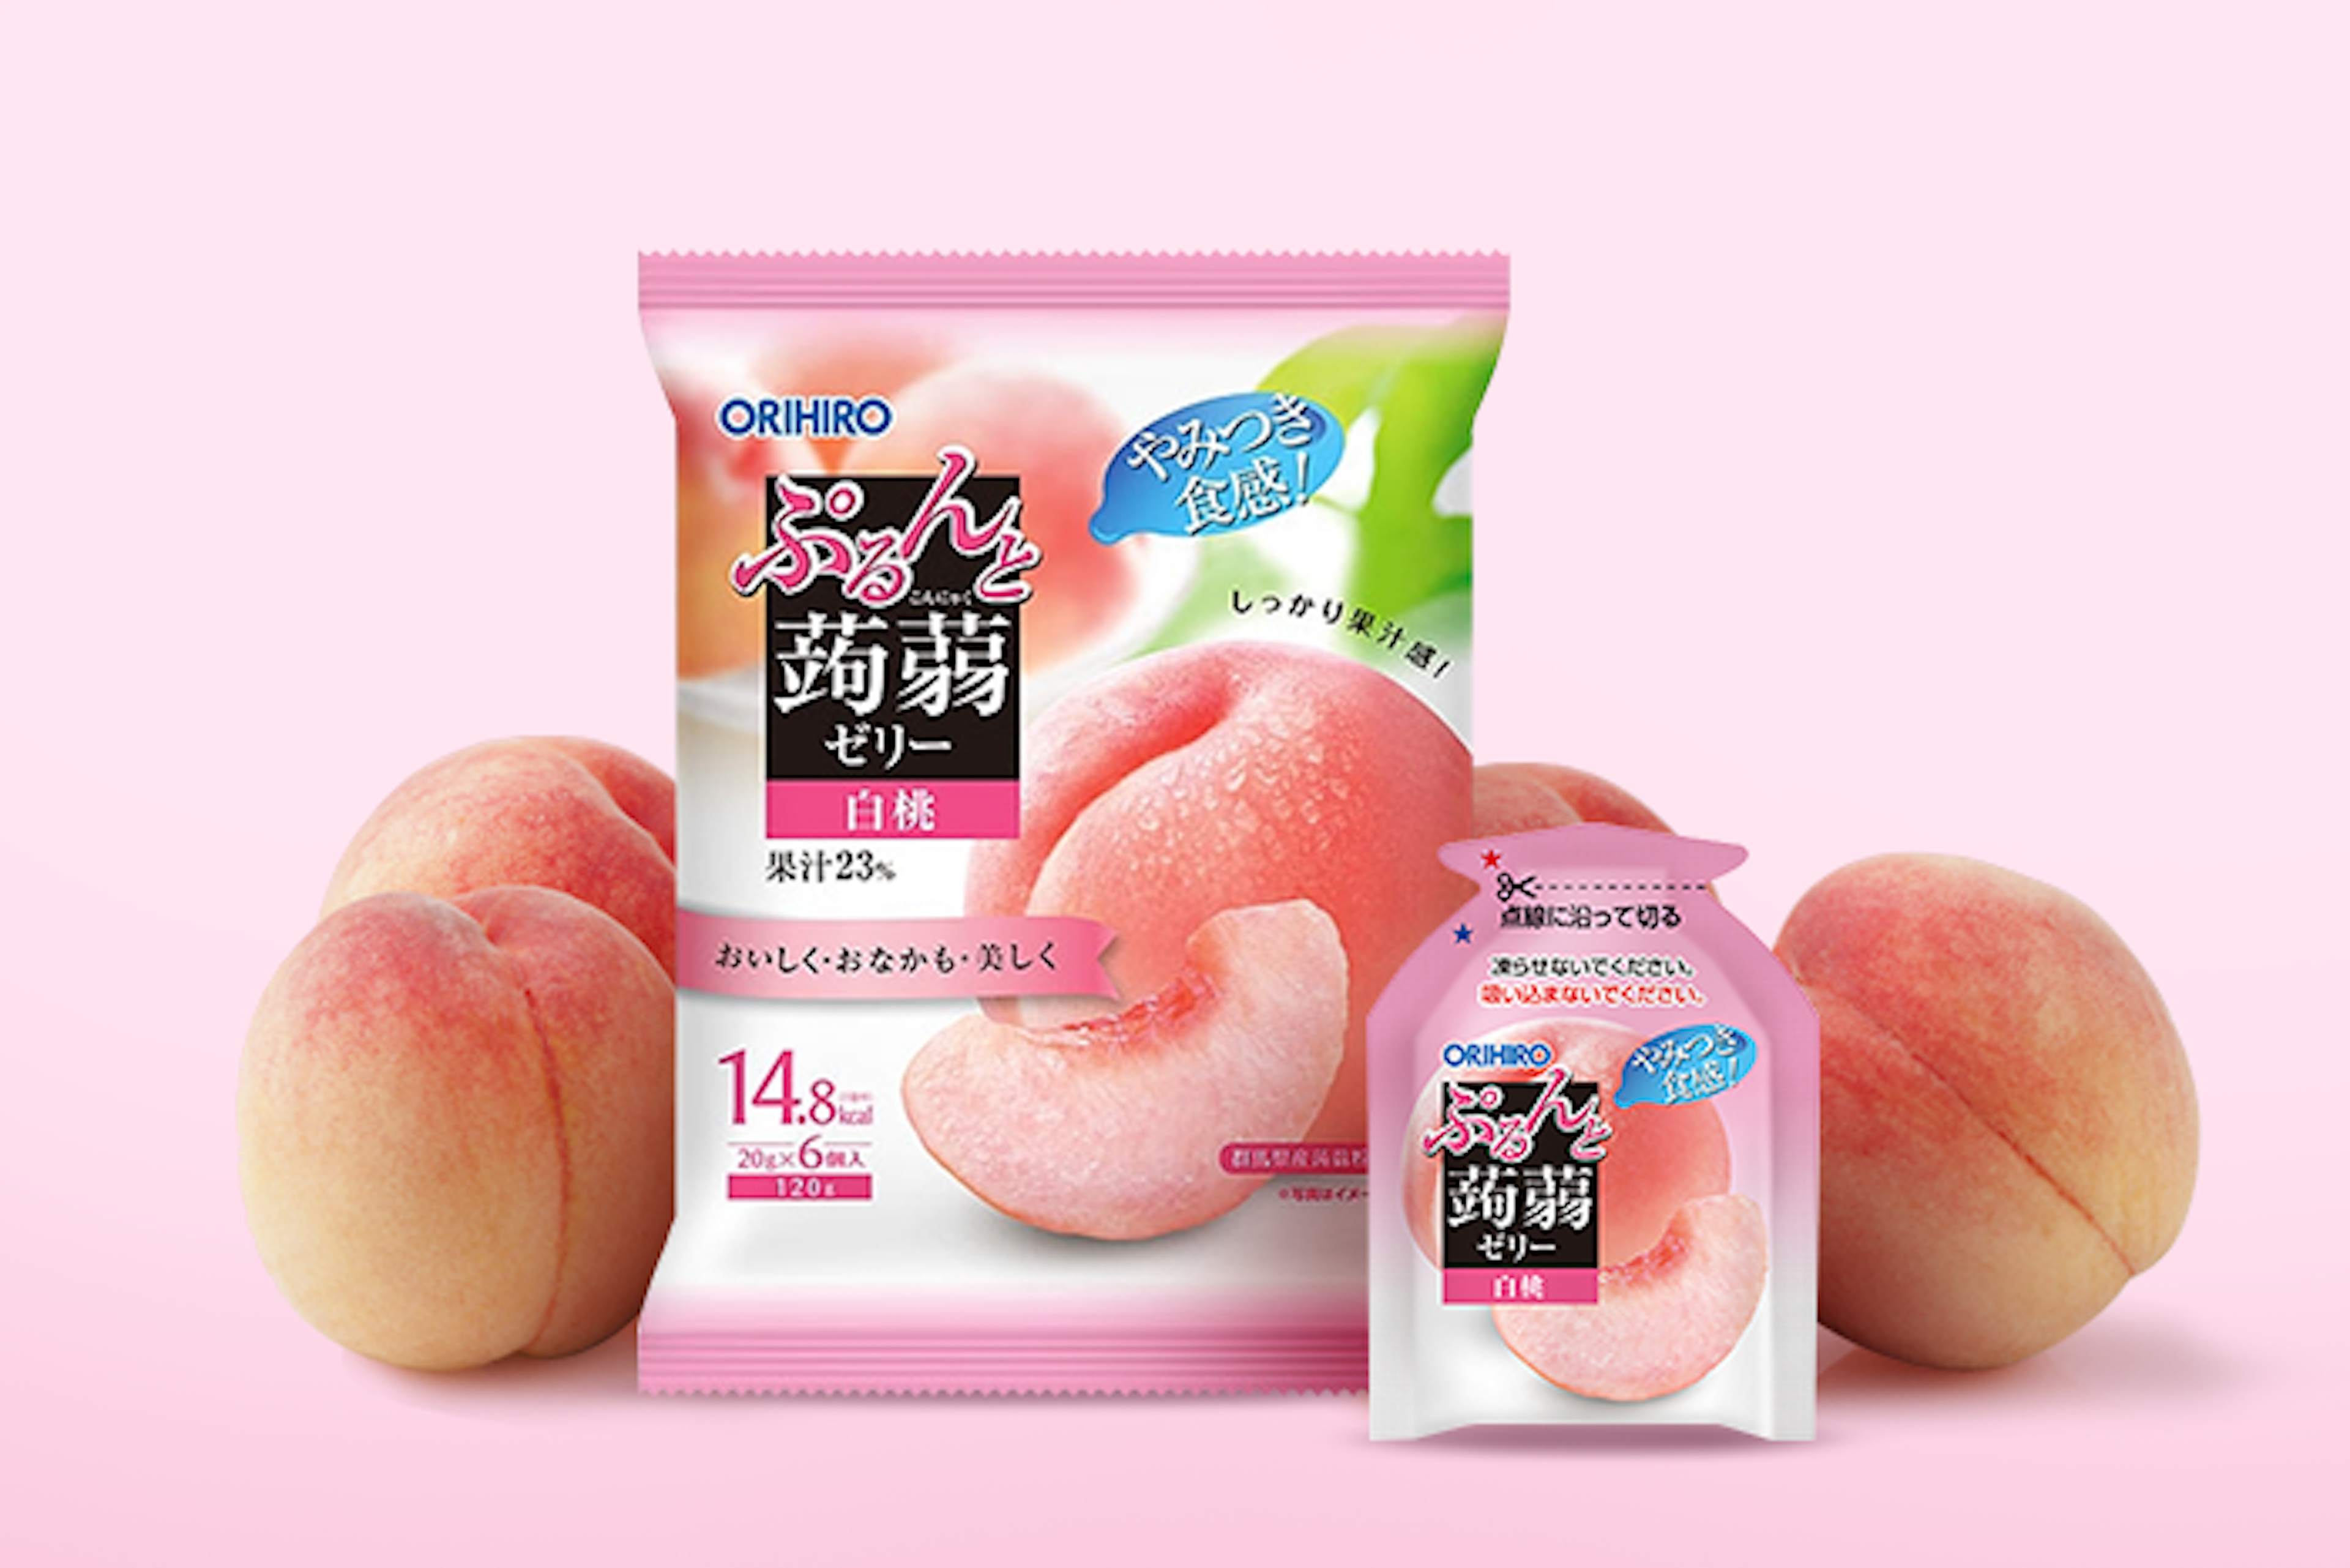 ORIHIRO Purunto Konjac Jelly Pouch Peach 120g - Low calorie and delicious snacks